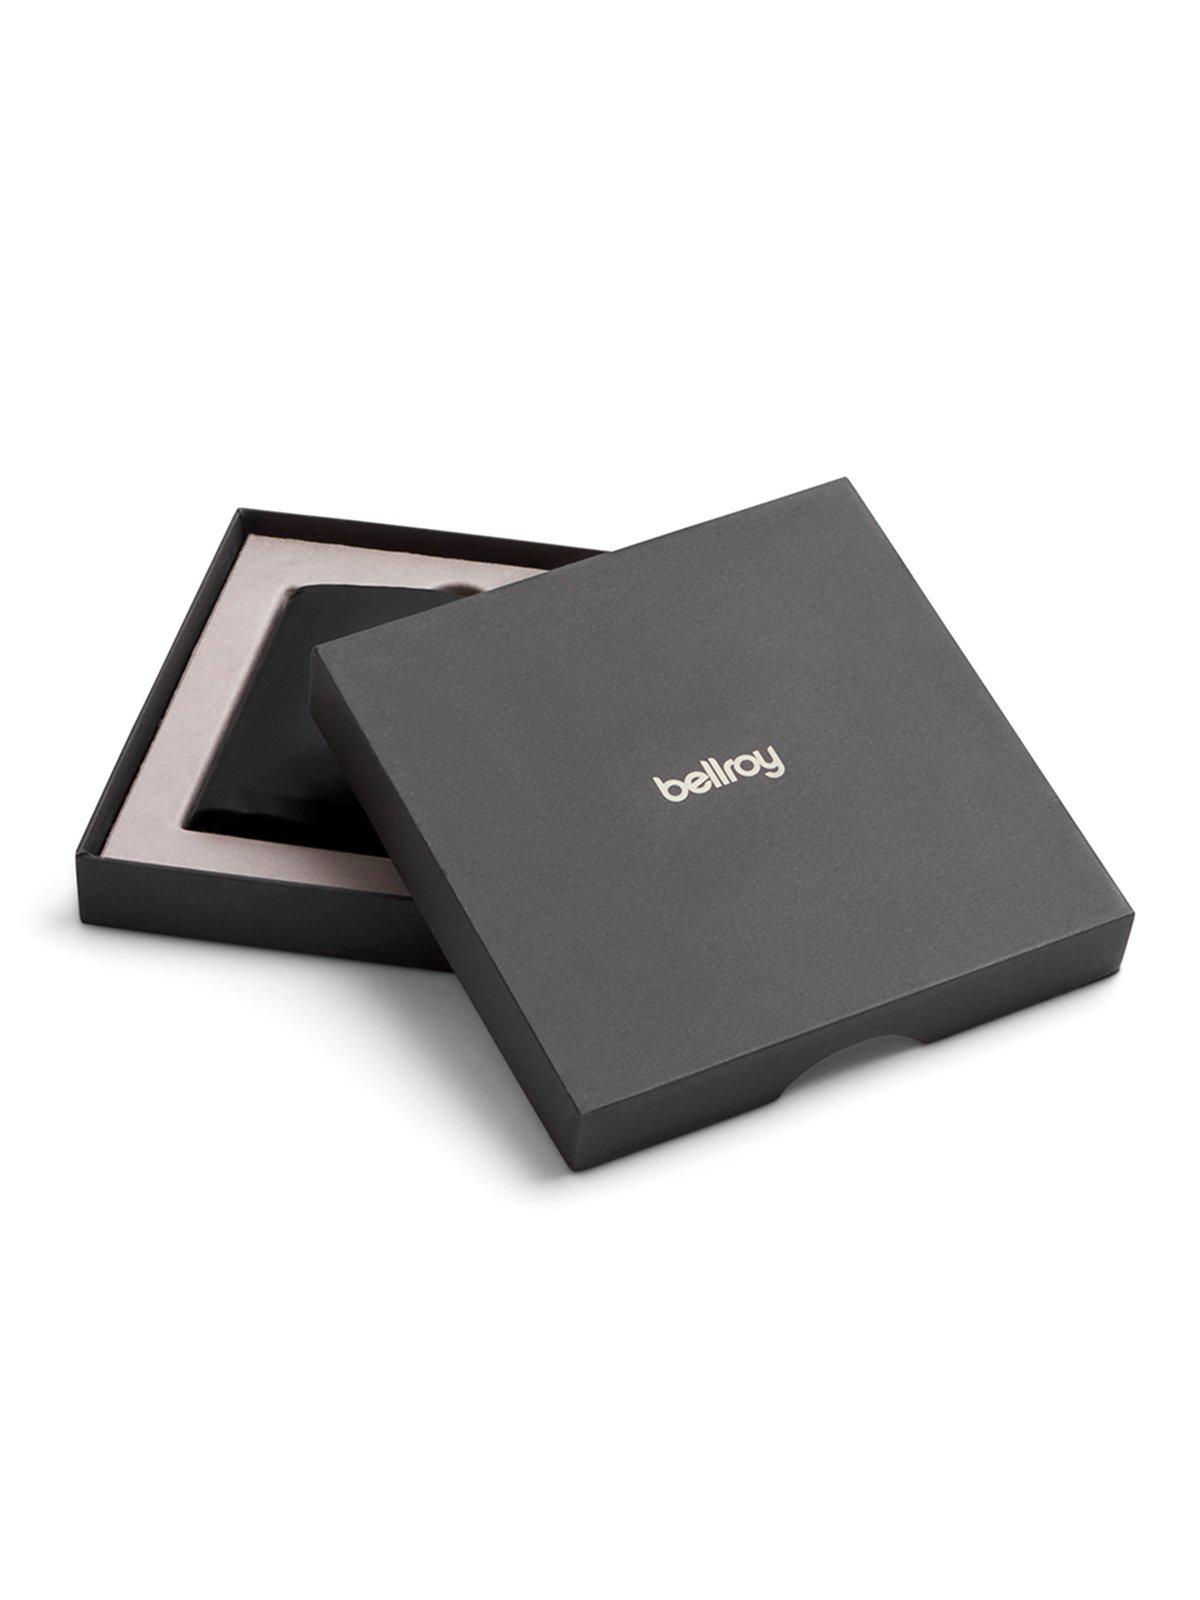 Bellroy Slim Sleeve Wallet Premium Edition Natural RFID